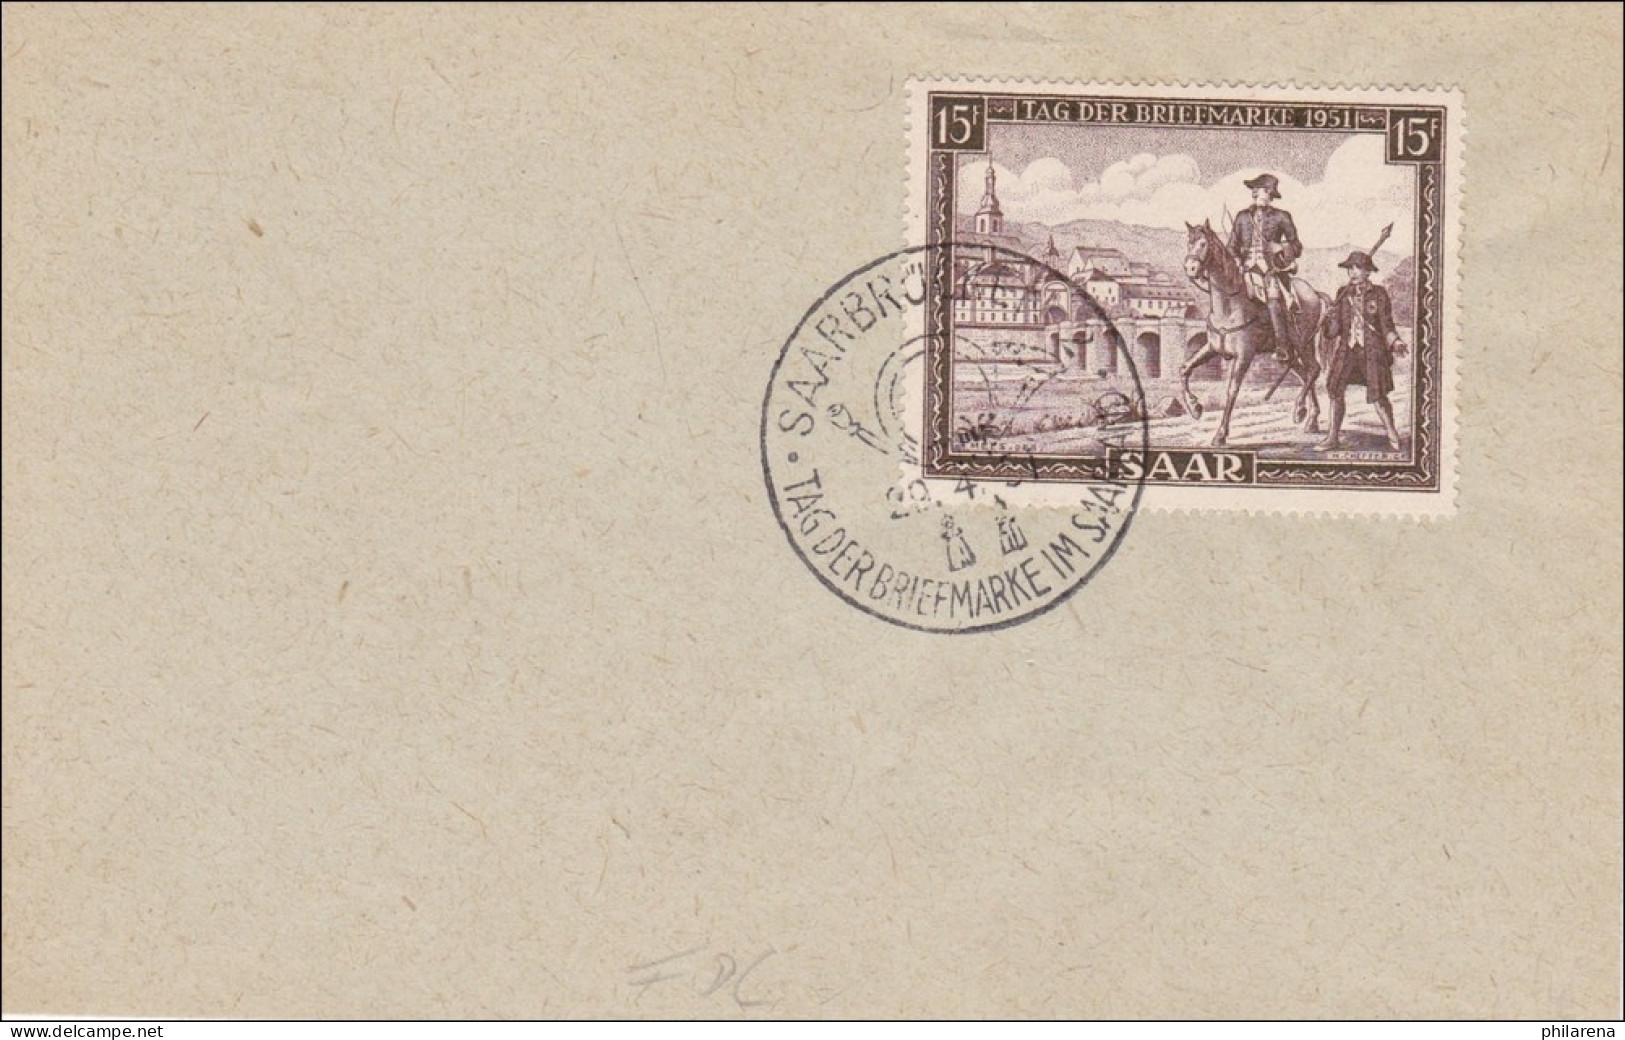 Saar: Saarbrücken Tag Der Briefmarke 1951, FDC - Covers & Documents